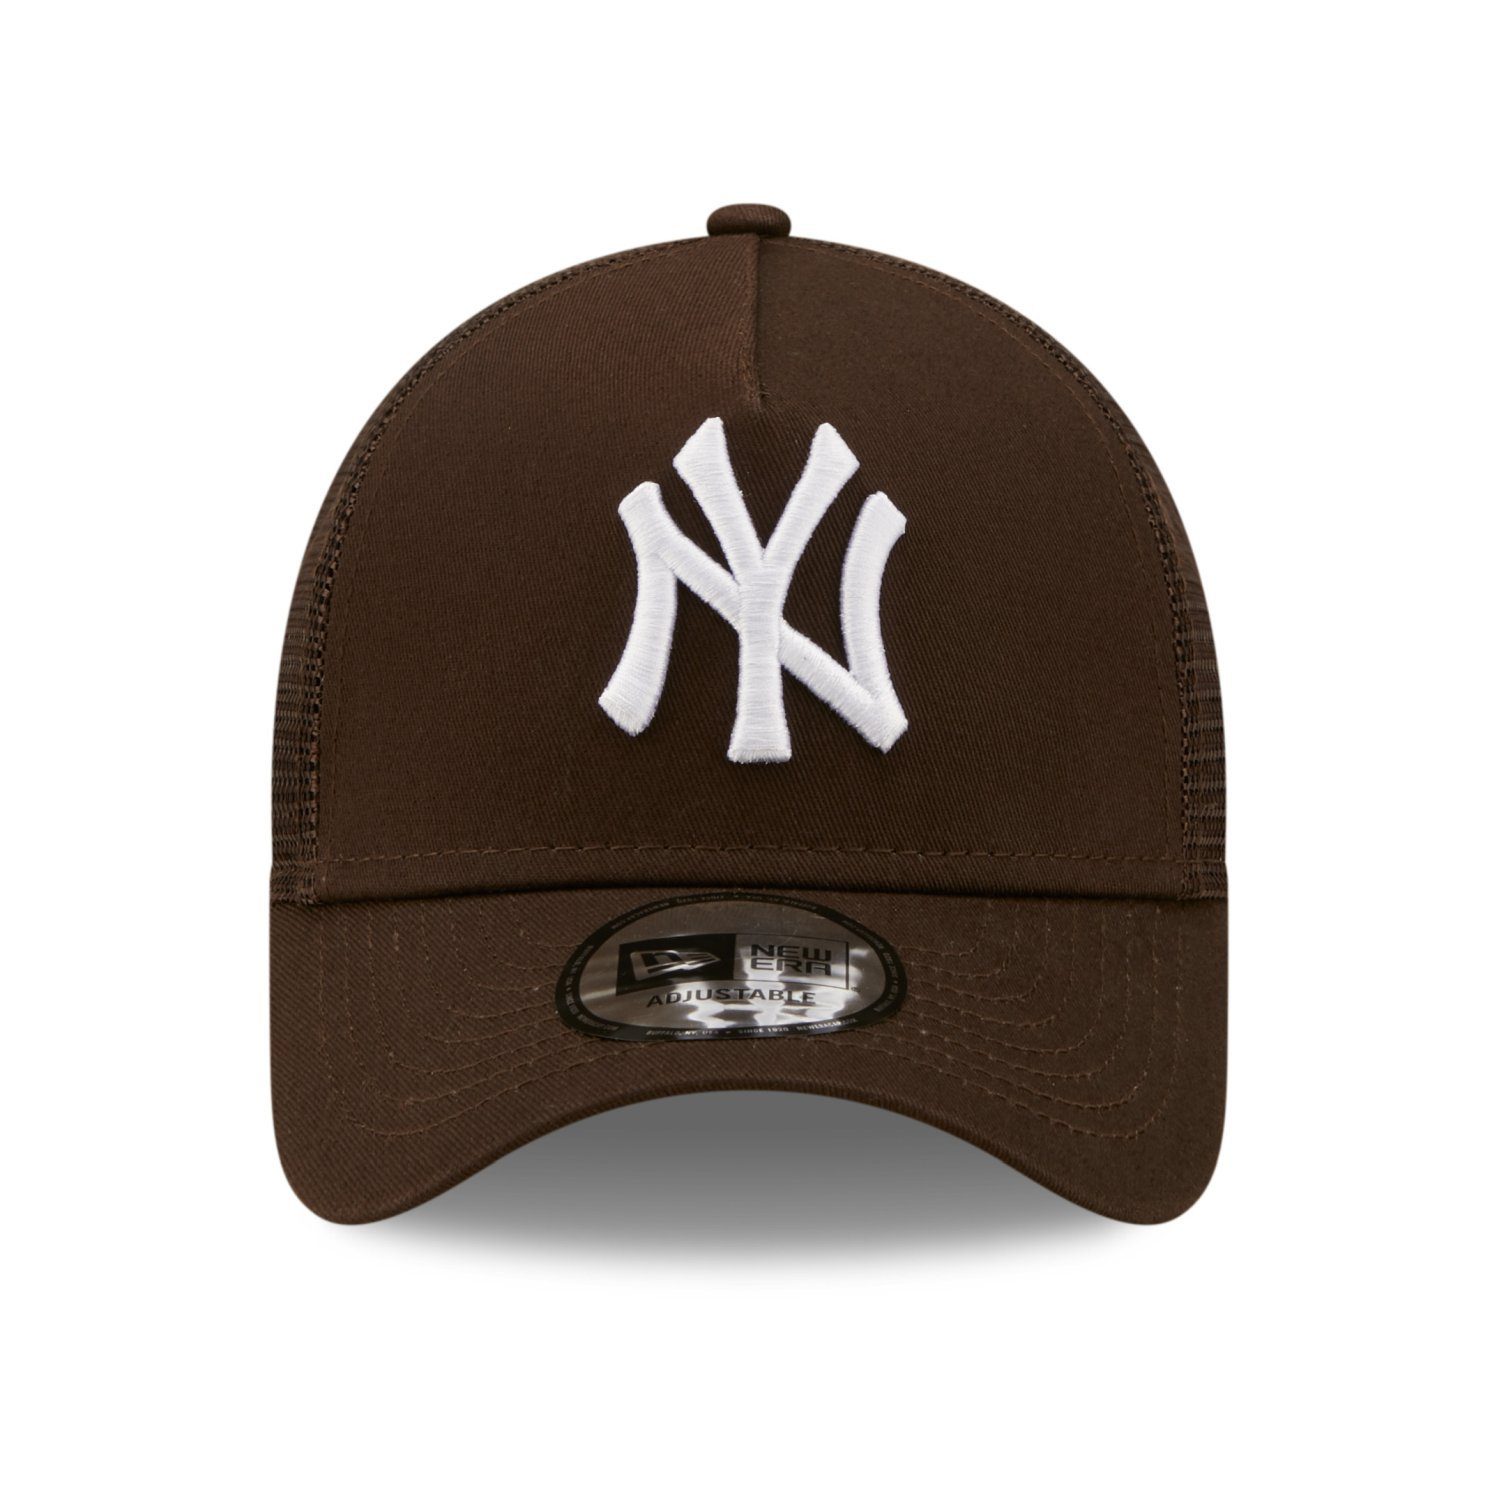 New New Baseball Trucker Cap Era York Yankees